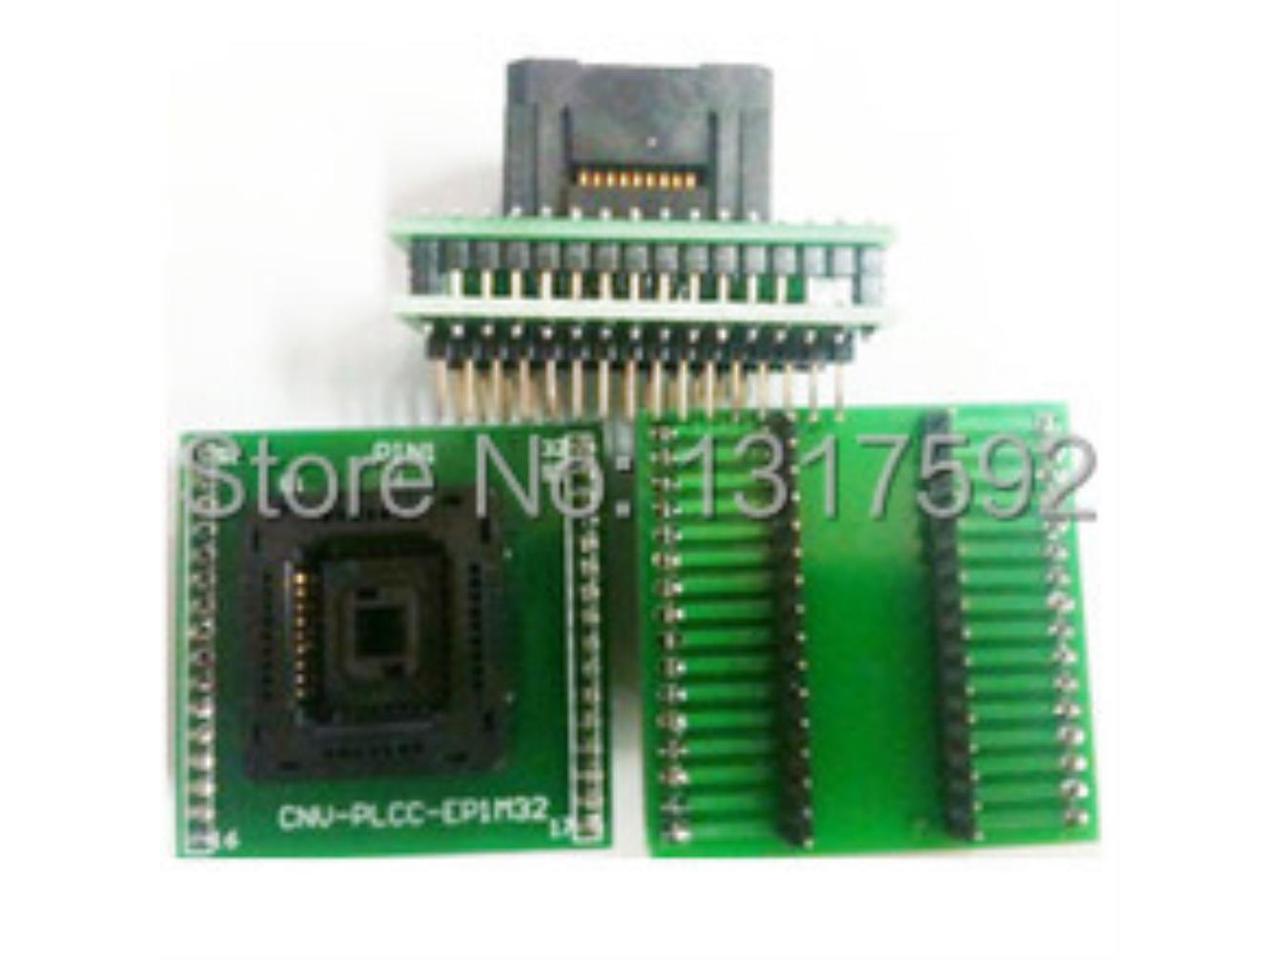 Plcc32 to dip32 programmer adapter ic socket converter module_N WD 